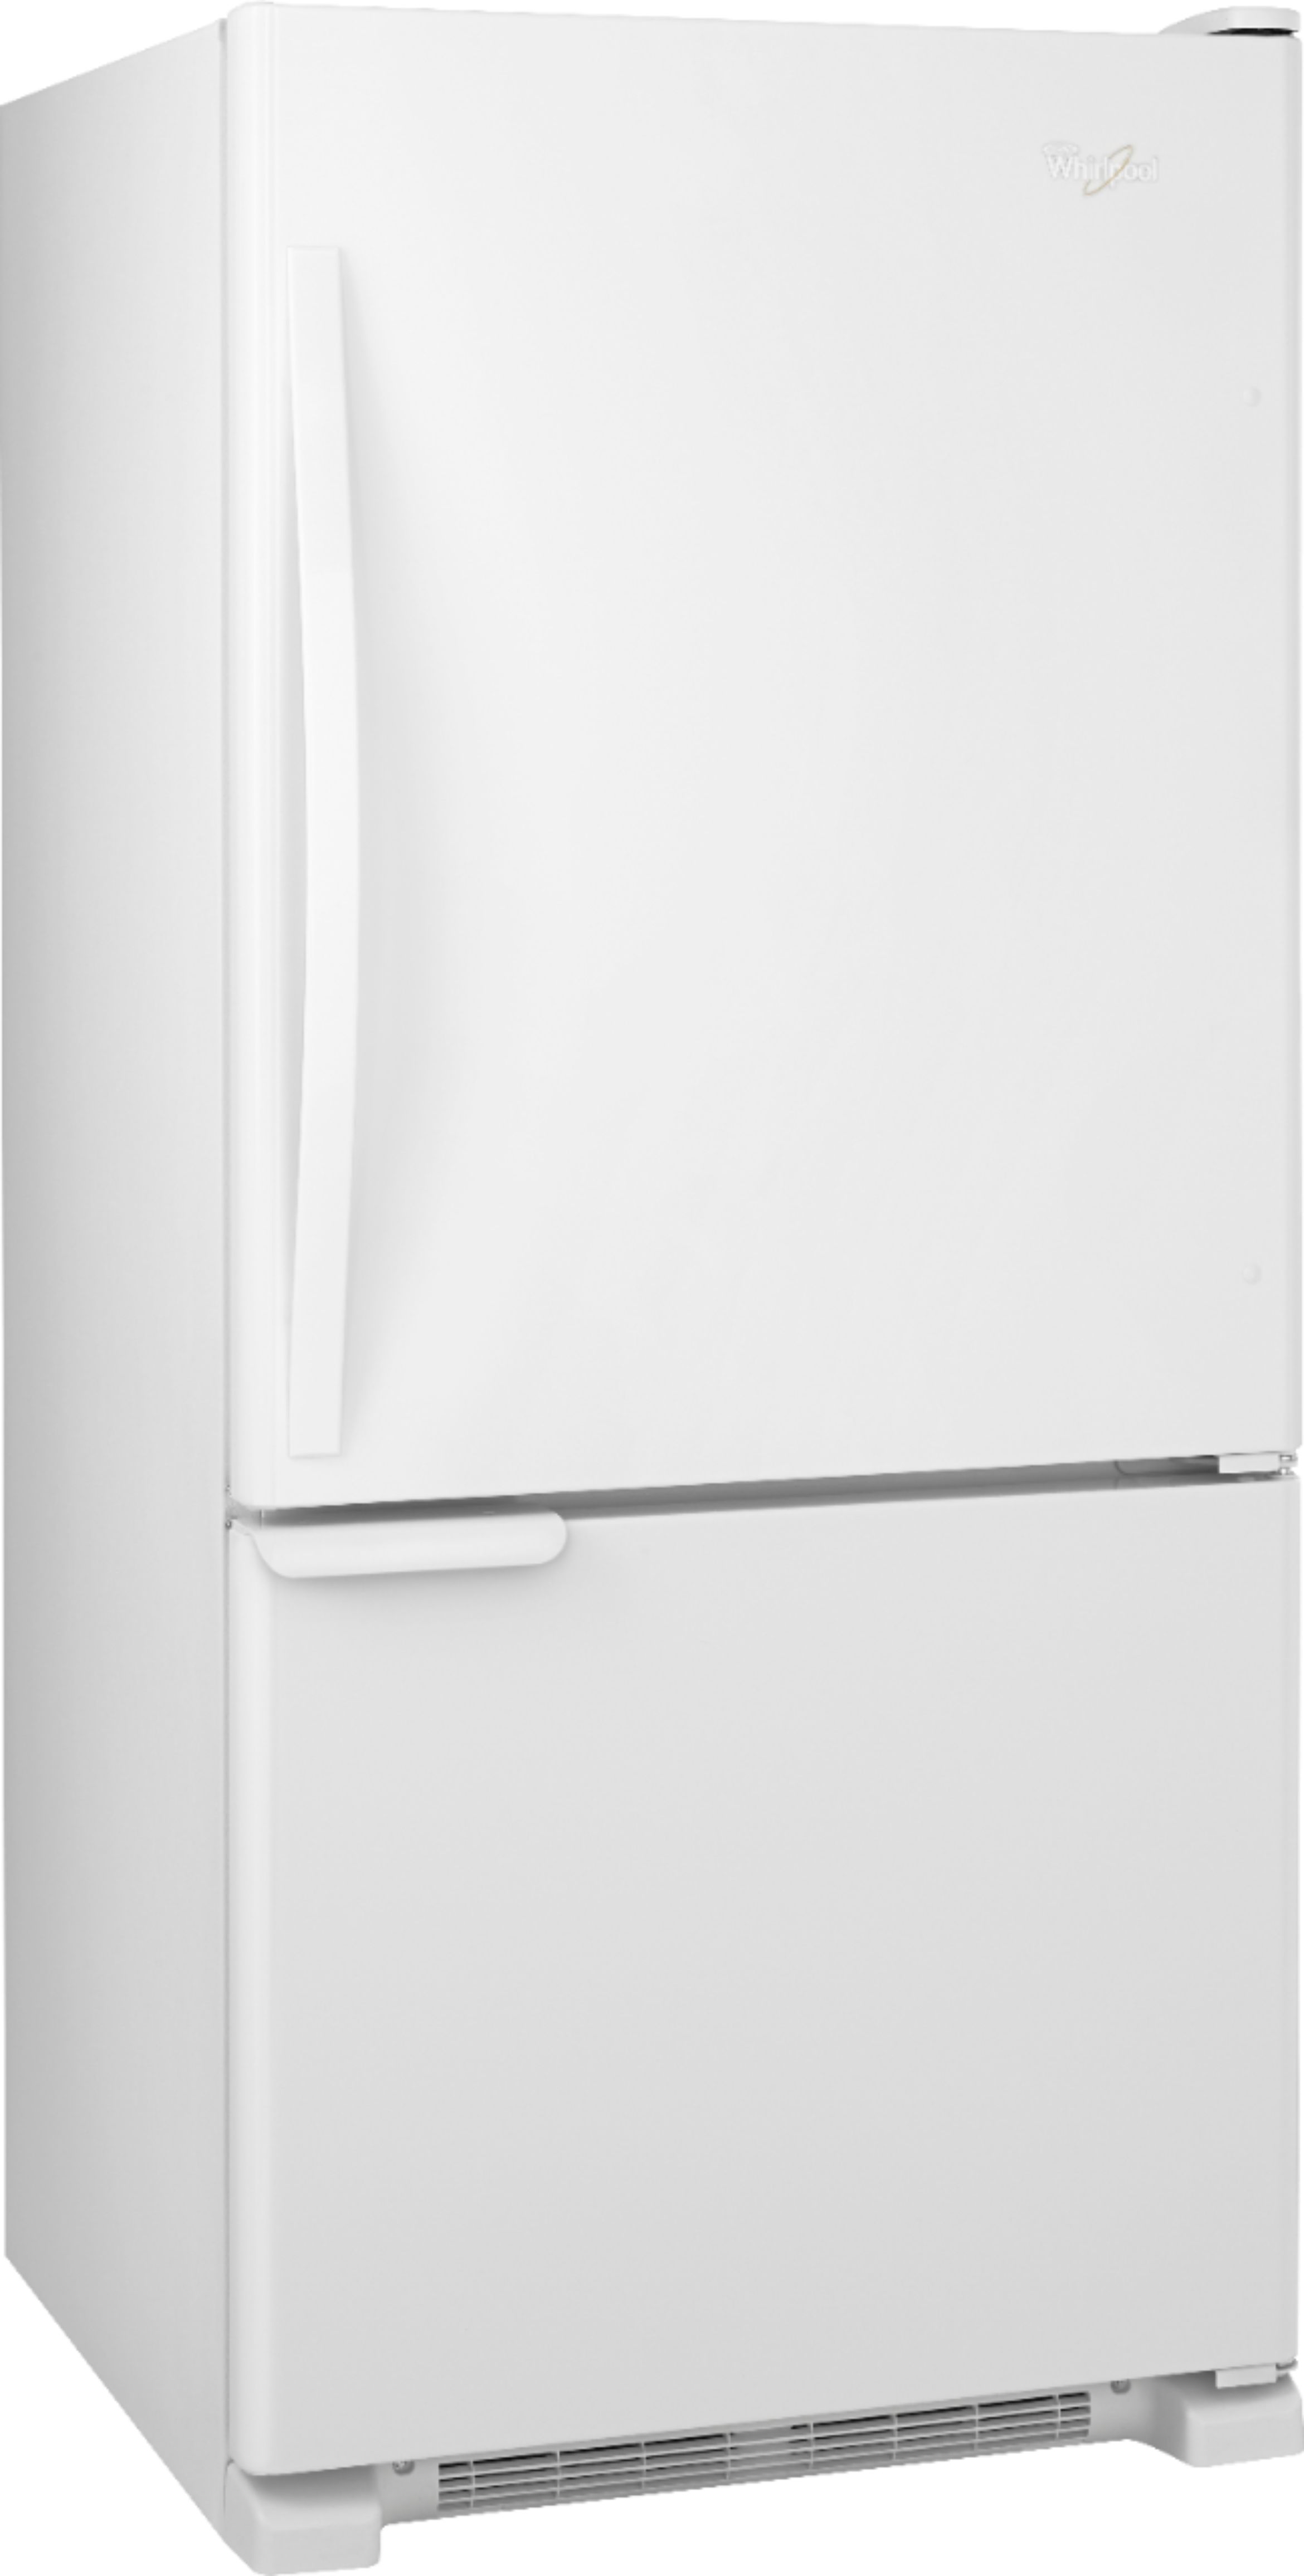 Angle View: Whirlpool - 18.5 Cu. Ft. Bottom-Freezer Refrigerator - White on White